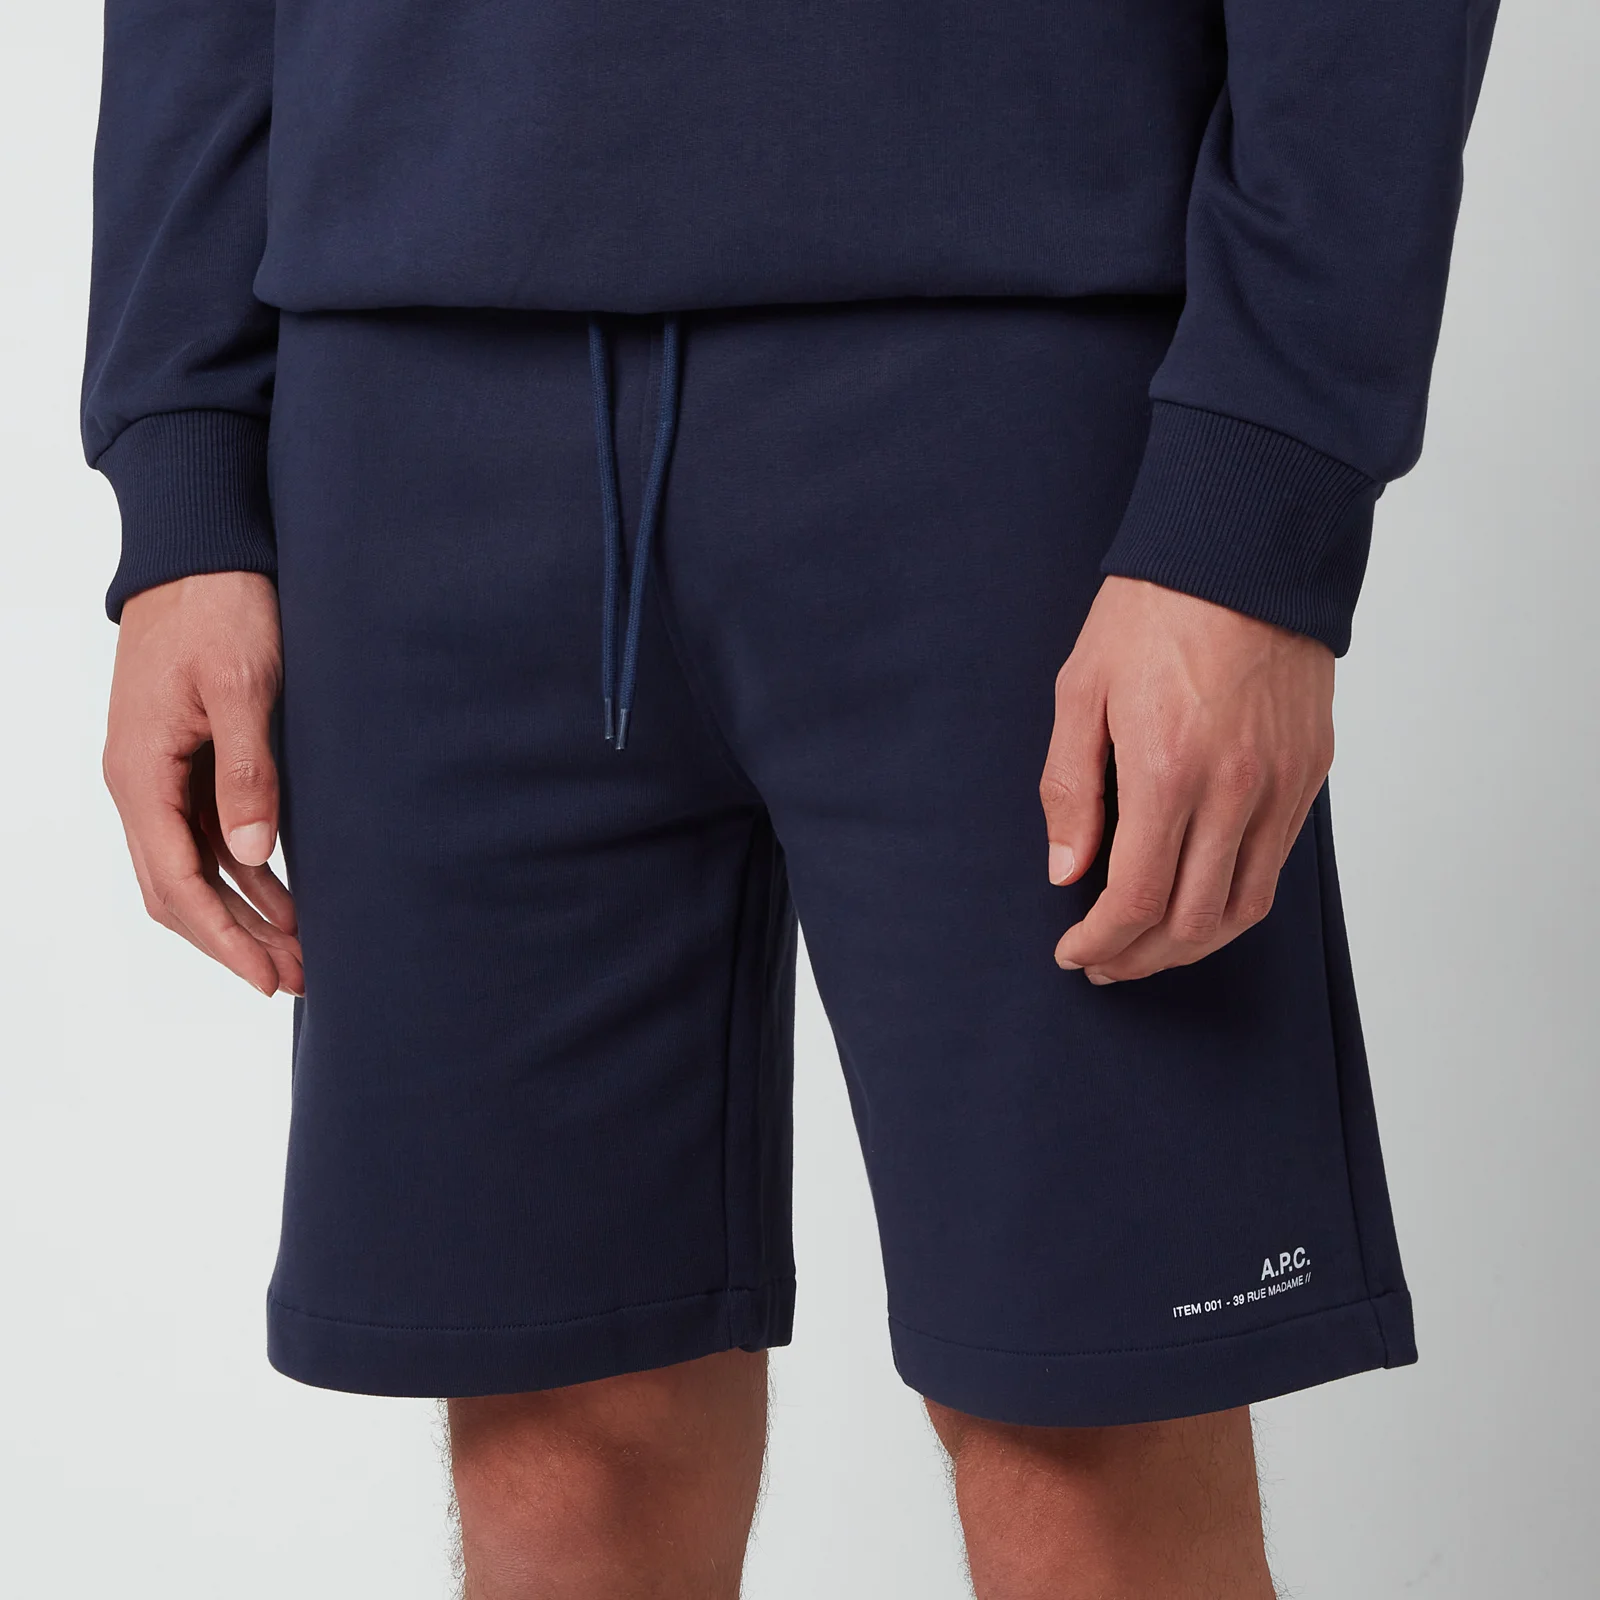 A.P.C. Men's Item Shorts - Dark Navy Image 1